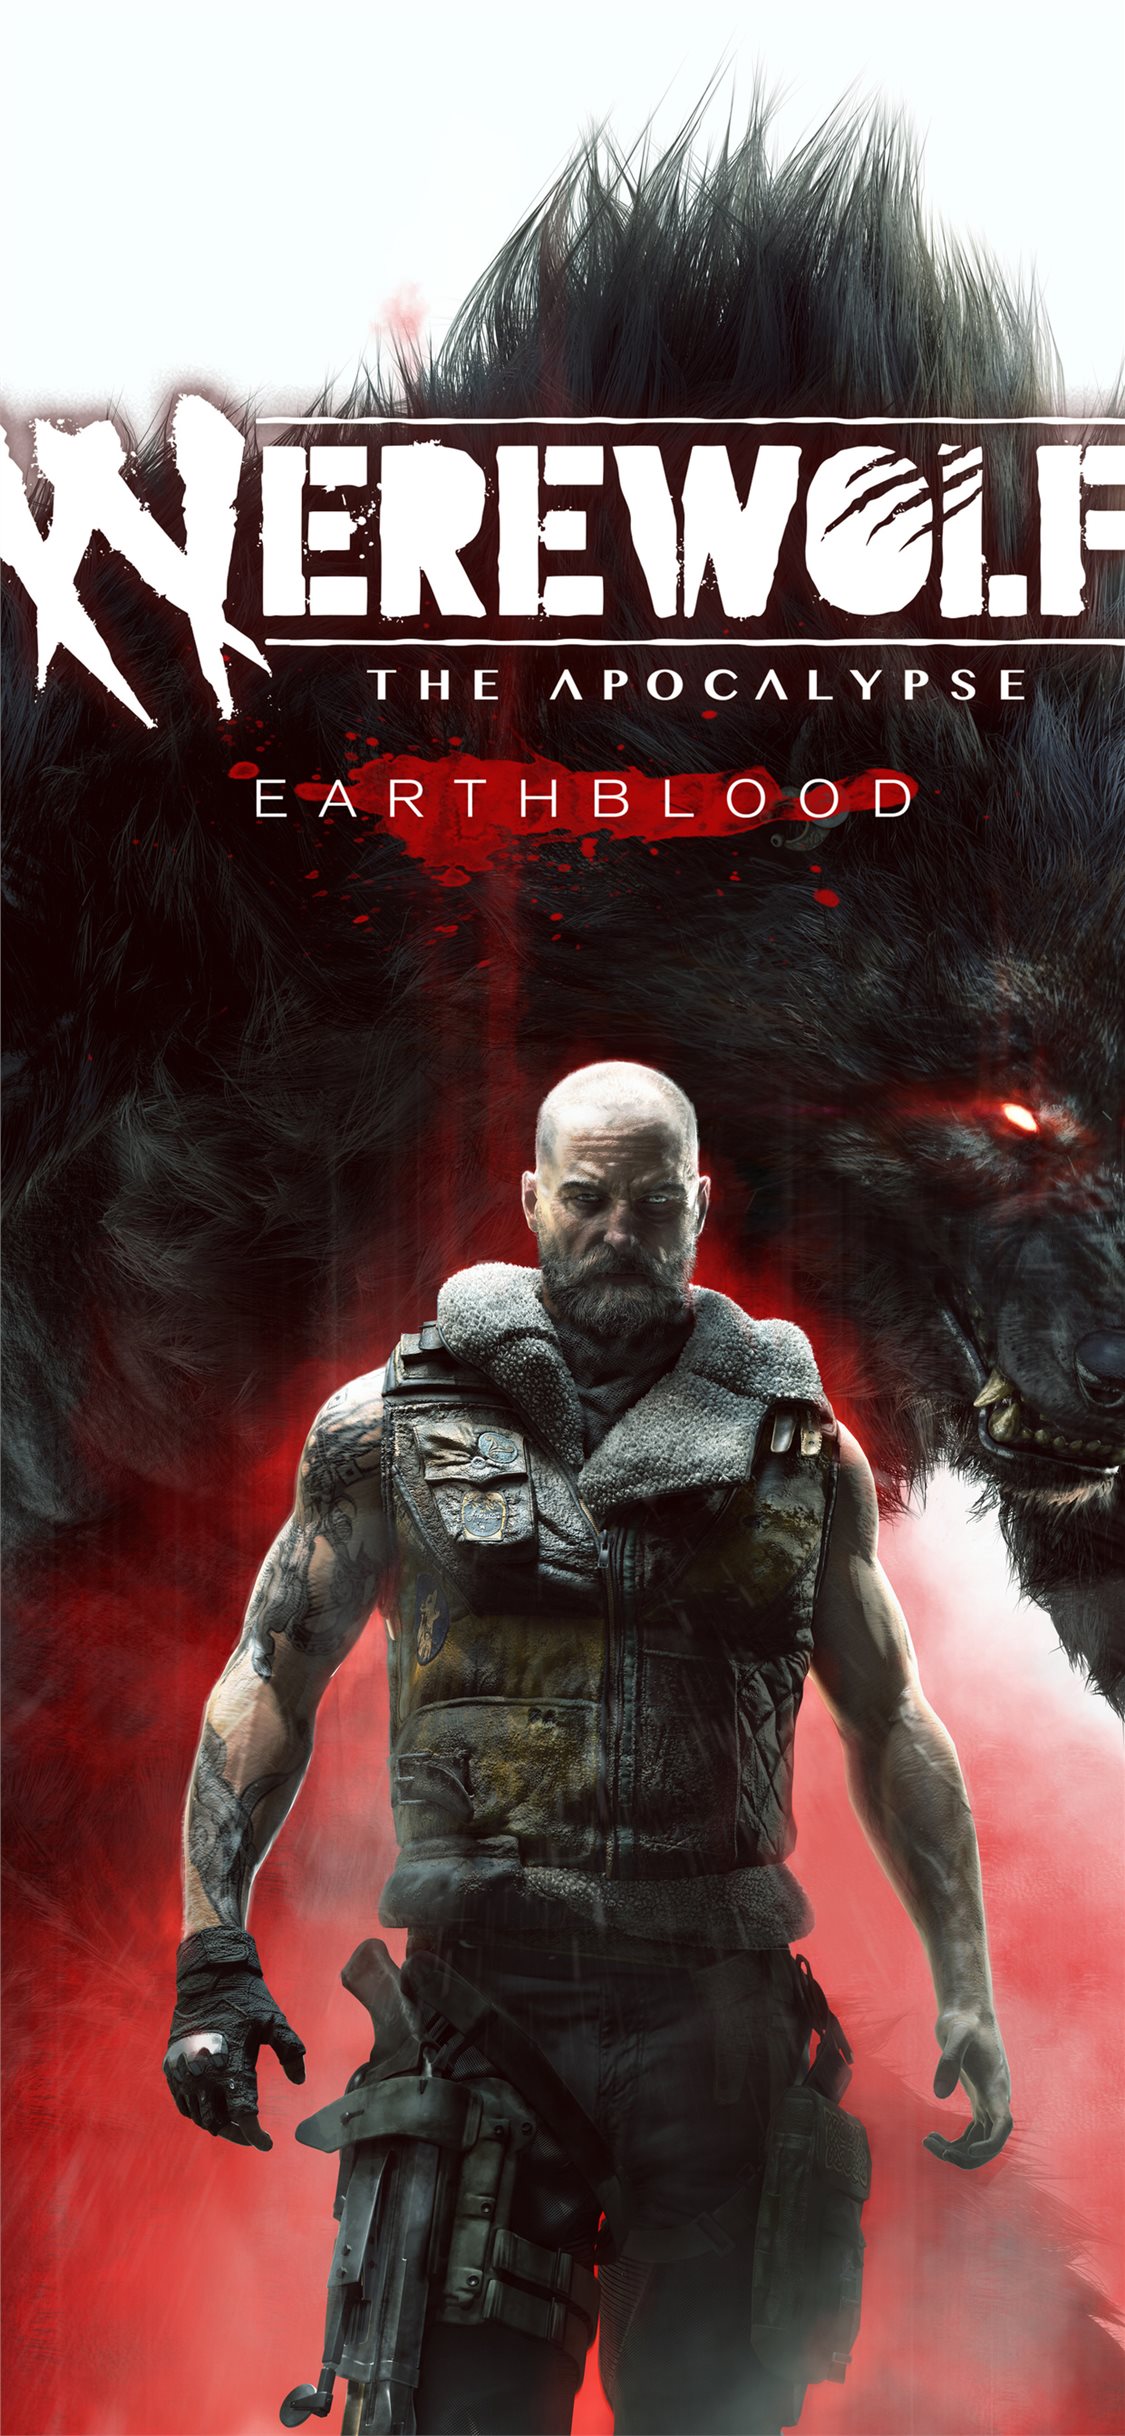 werewolf the apocalypse earthblood 2020 4k iPhone X Wallpapers